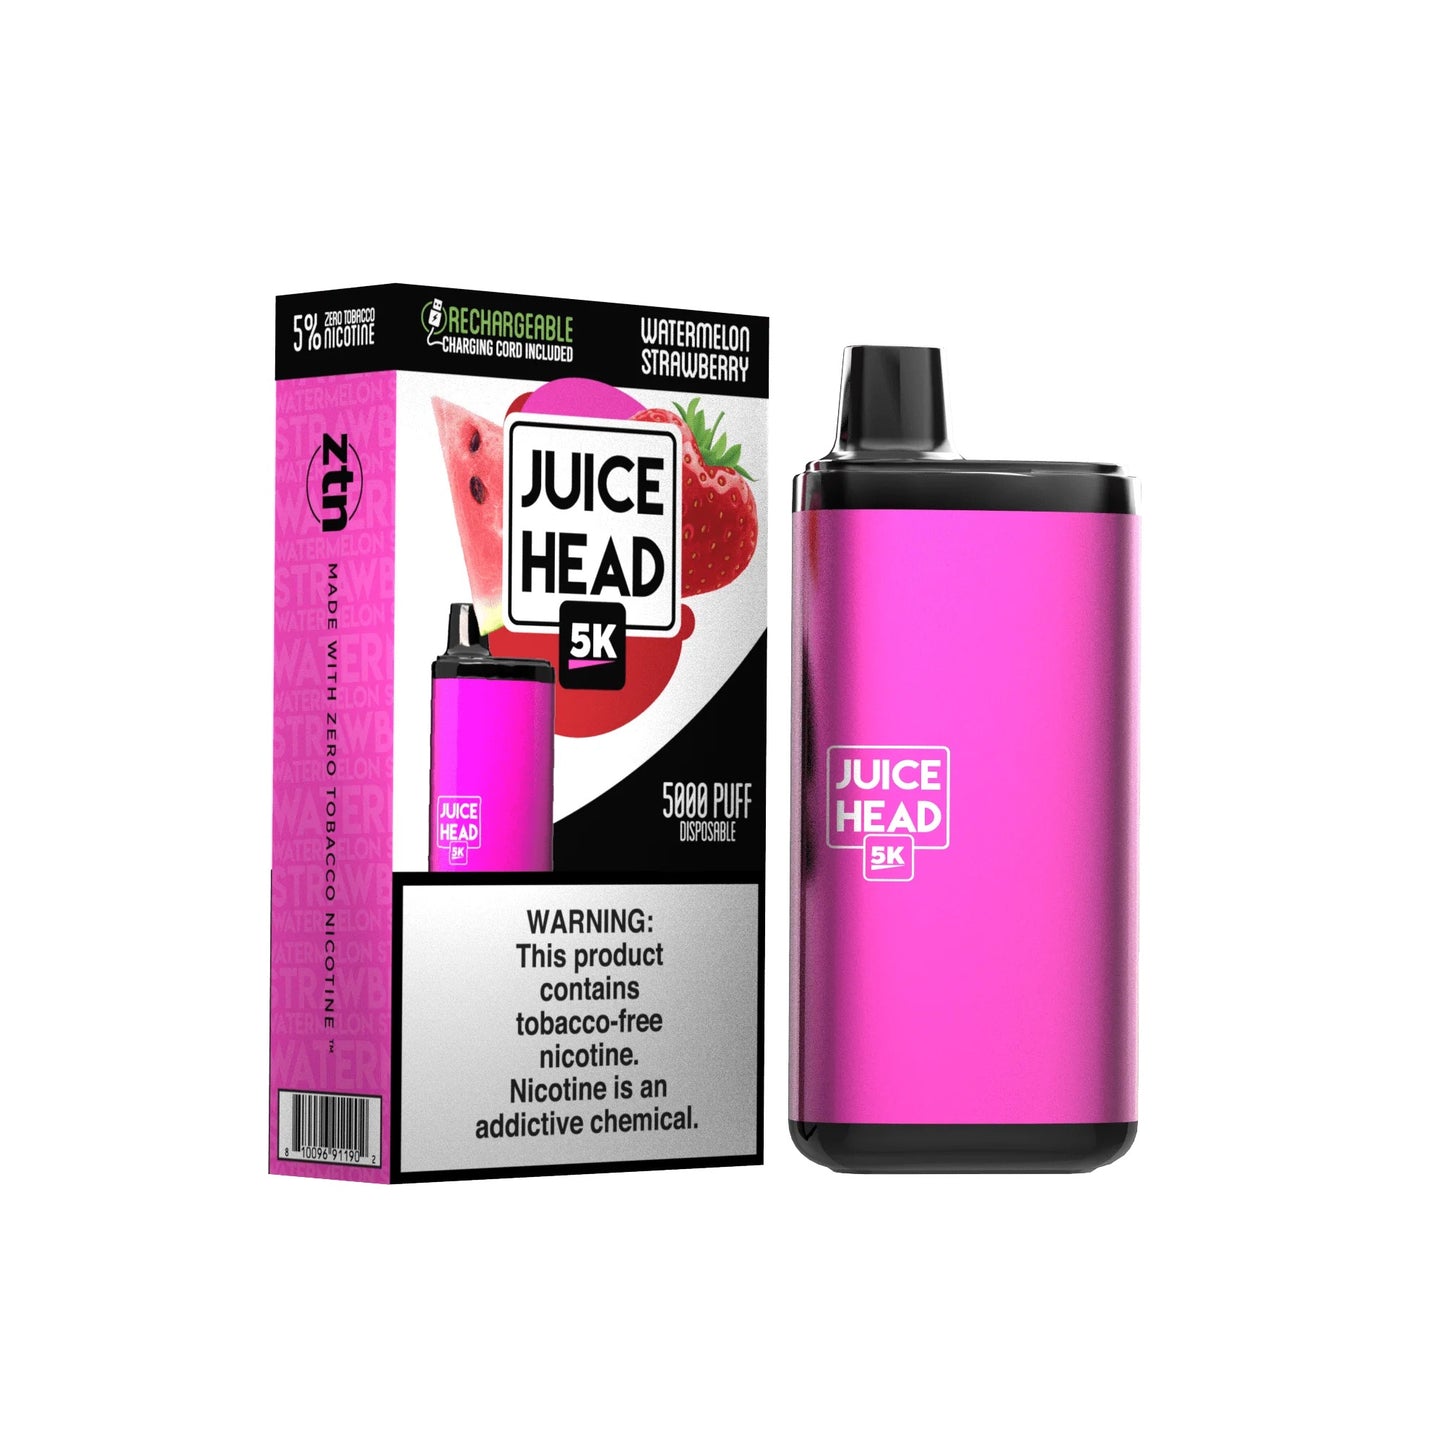 Juice Head 5K 5000 rechargeable vape device | $22.99 - Smok City